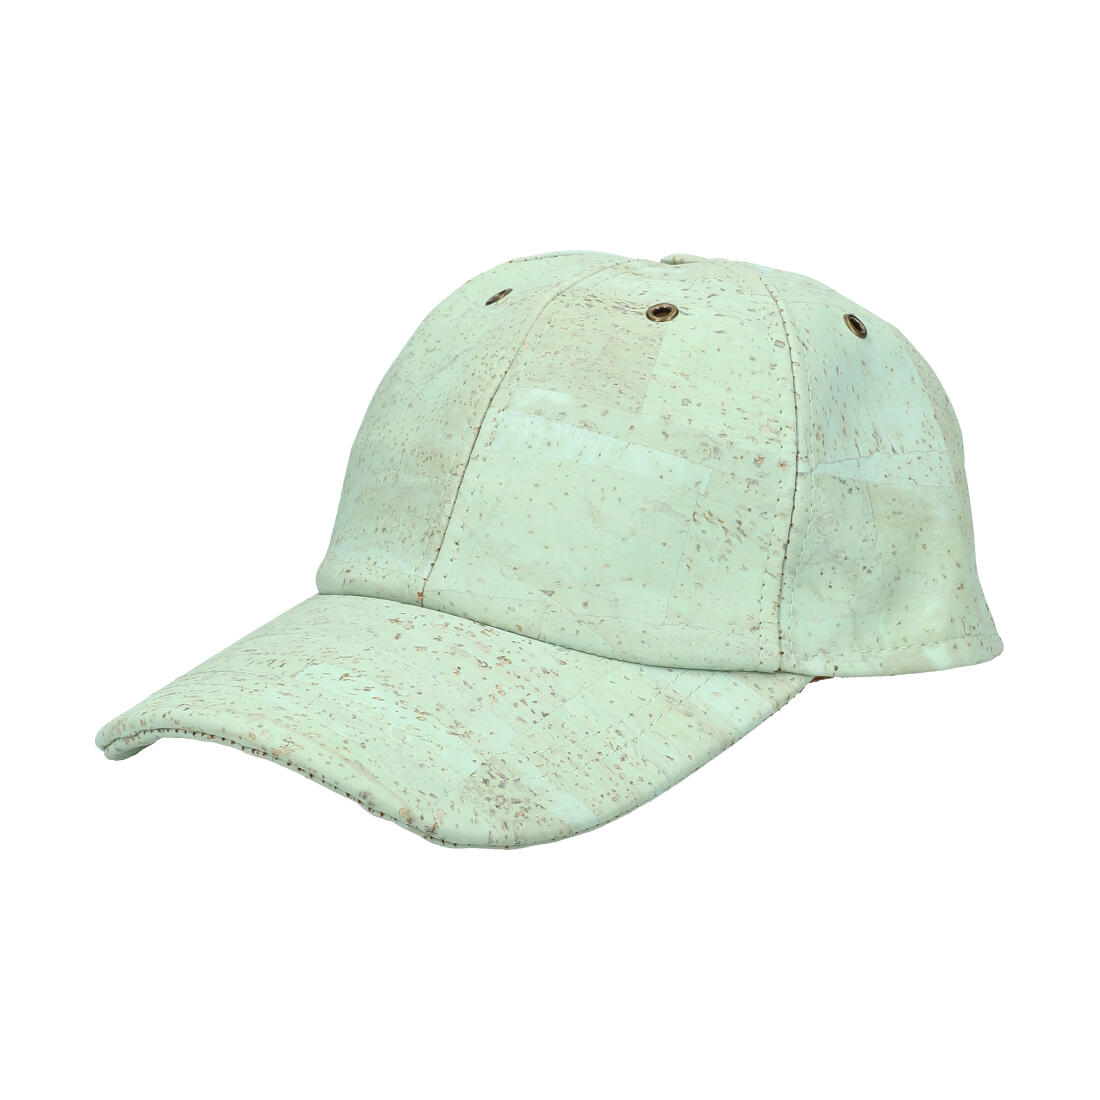 Chapéu de cortiça QMV30 10 GREEN ModaServerPro